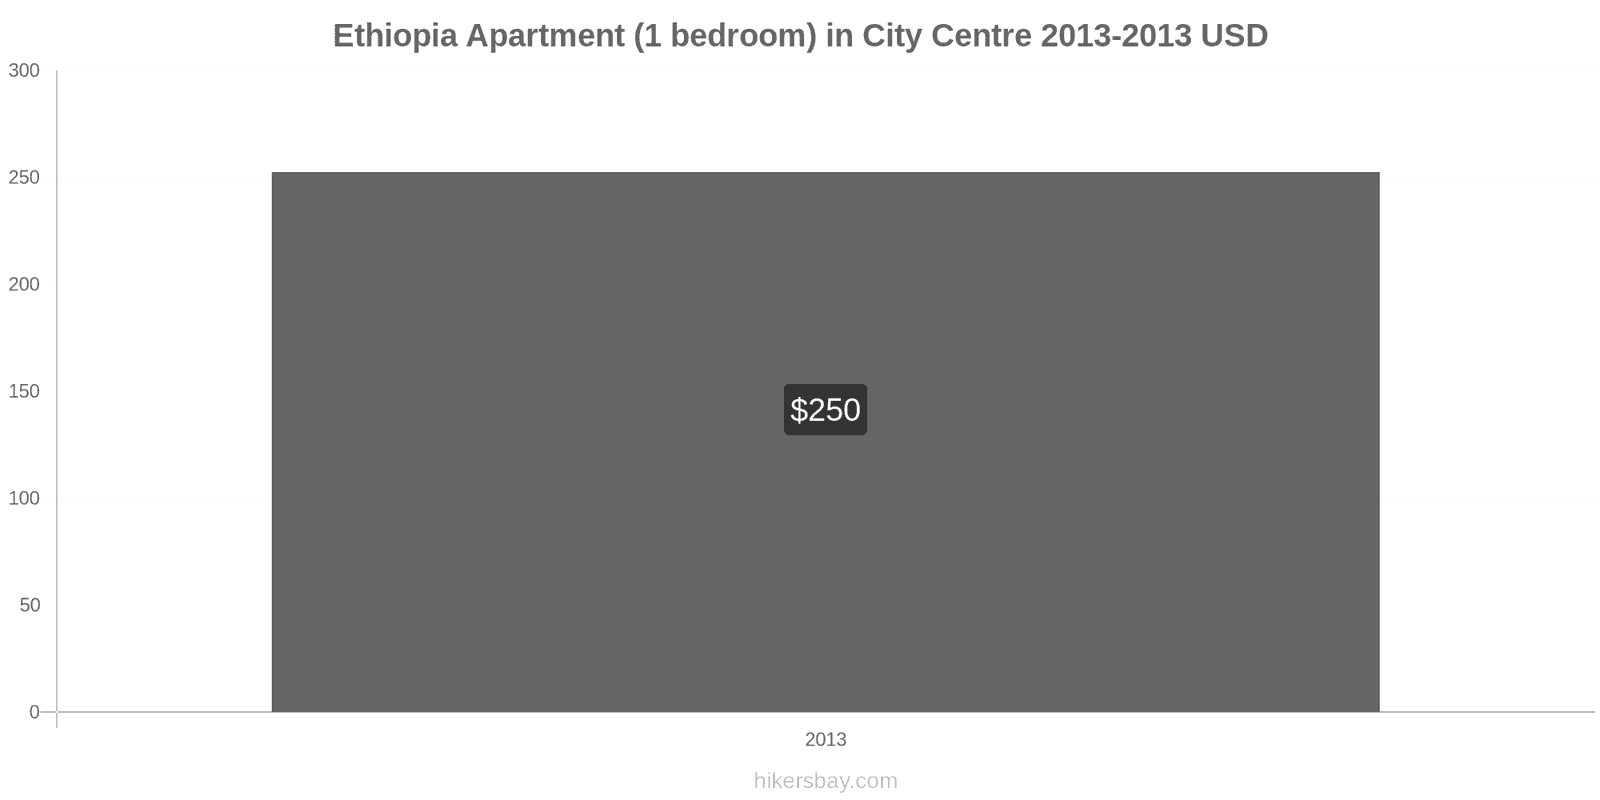 Ethiopia price changes Apartment (1 bedroom) in city centre hikersbay.com